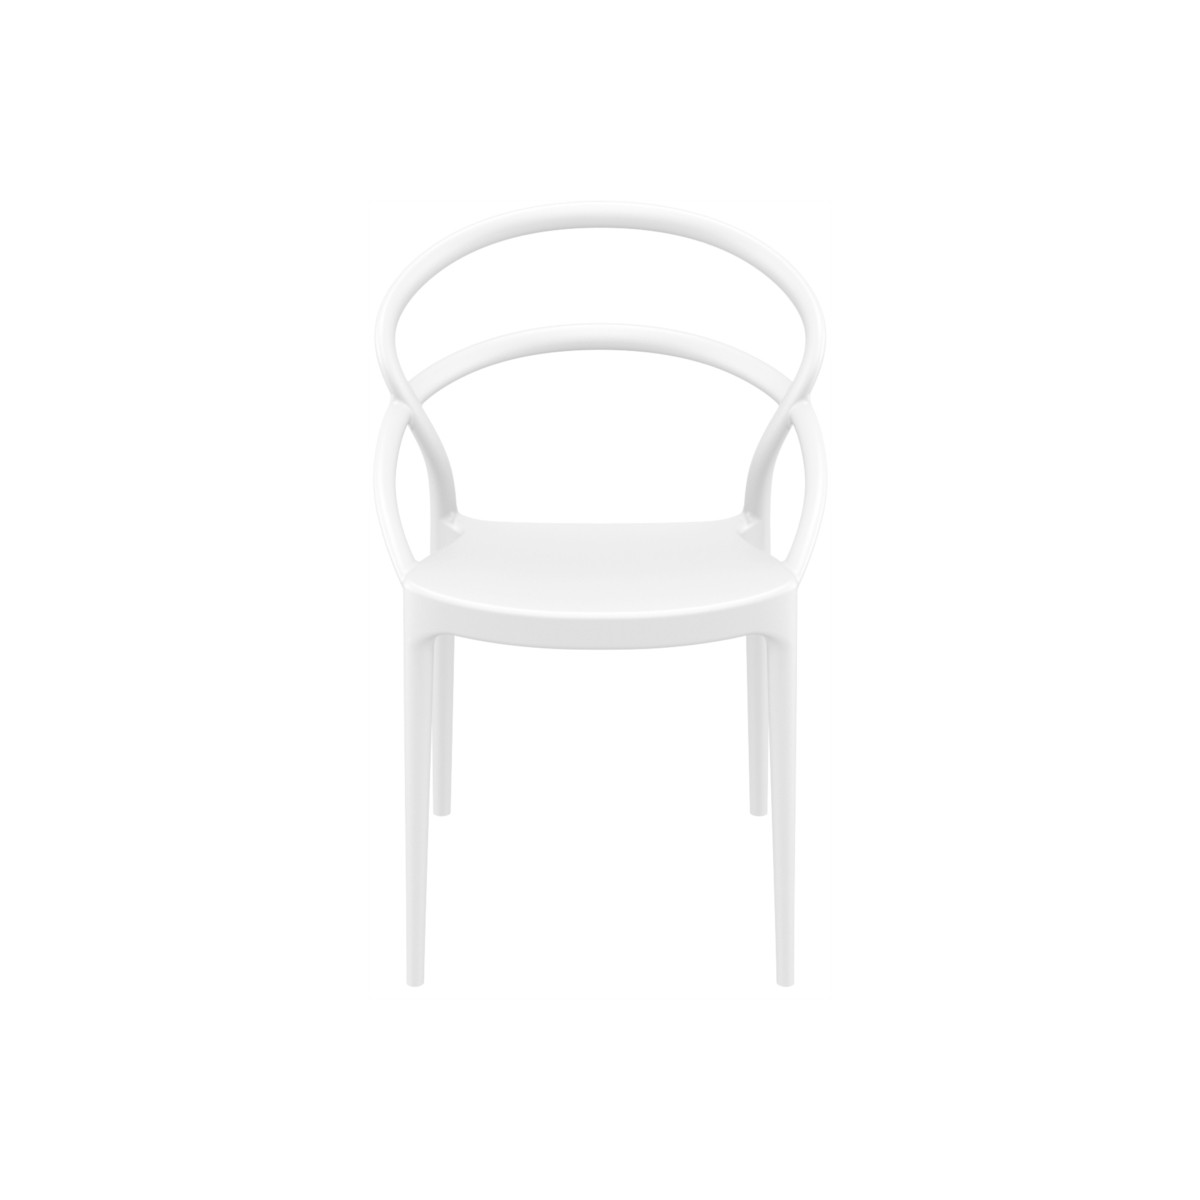 Chaise blanche design en polypropylène YOLANDA (Lot de 4) L 52 x P